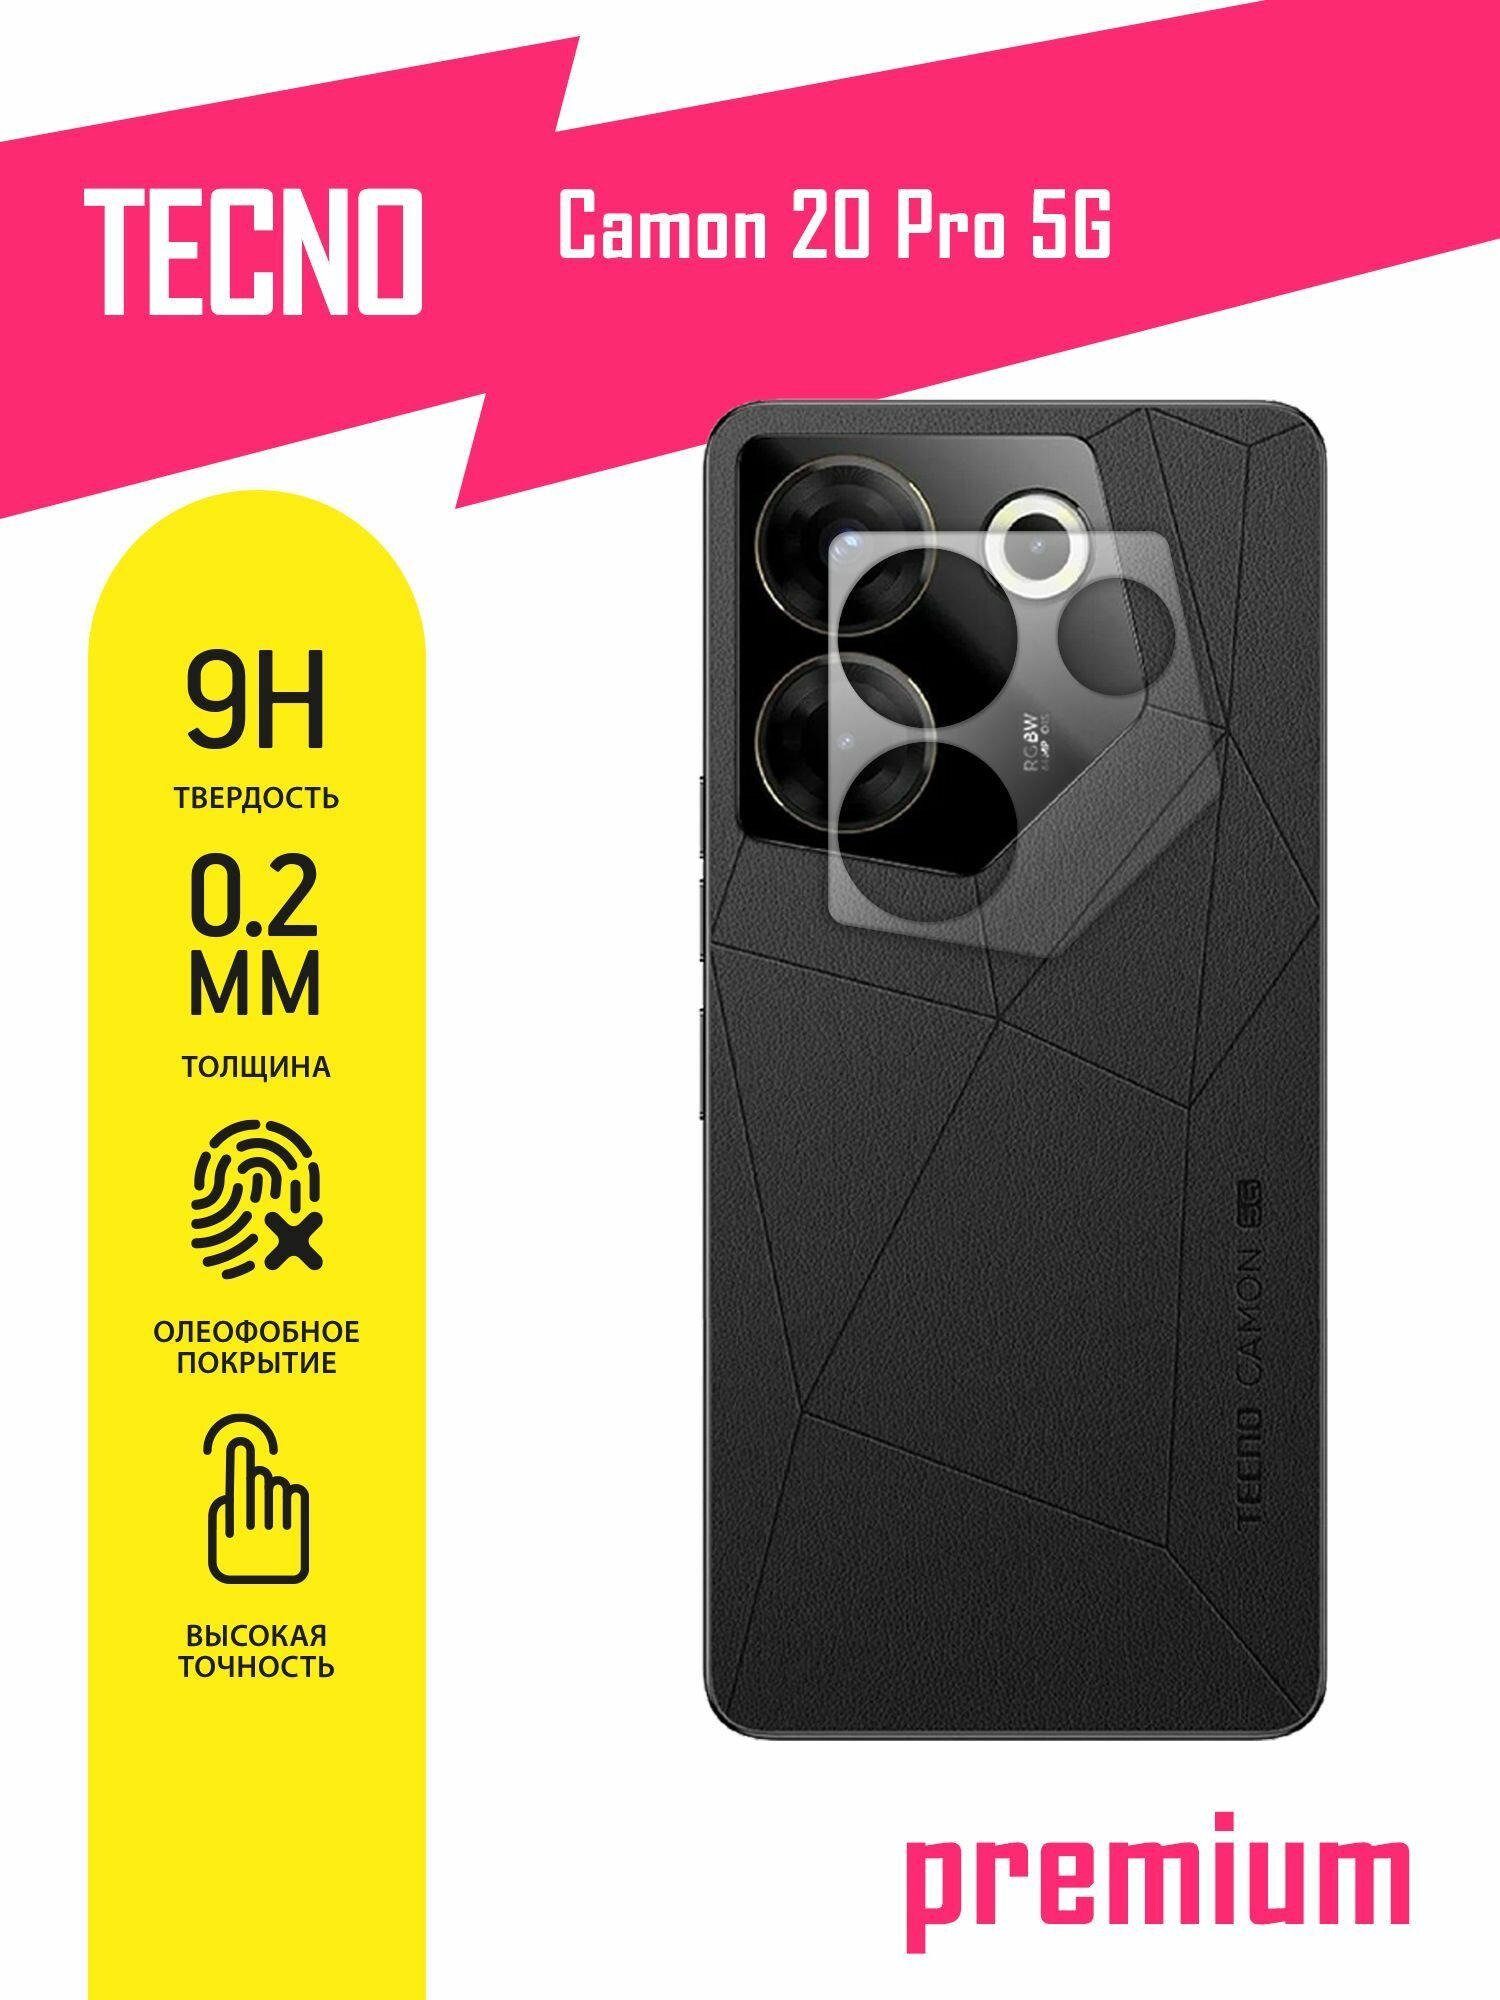 Защитное стекло для Tecno Camon 20 Pro 5G Техно Камон 20 Про 5Джи Текно только на камеру гибридное (гибкое стекло) 2шт AKSPro